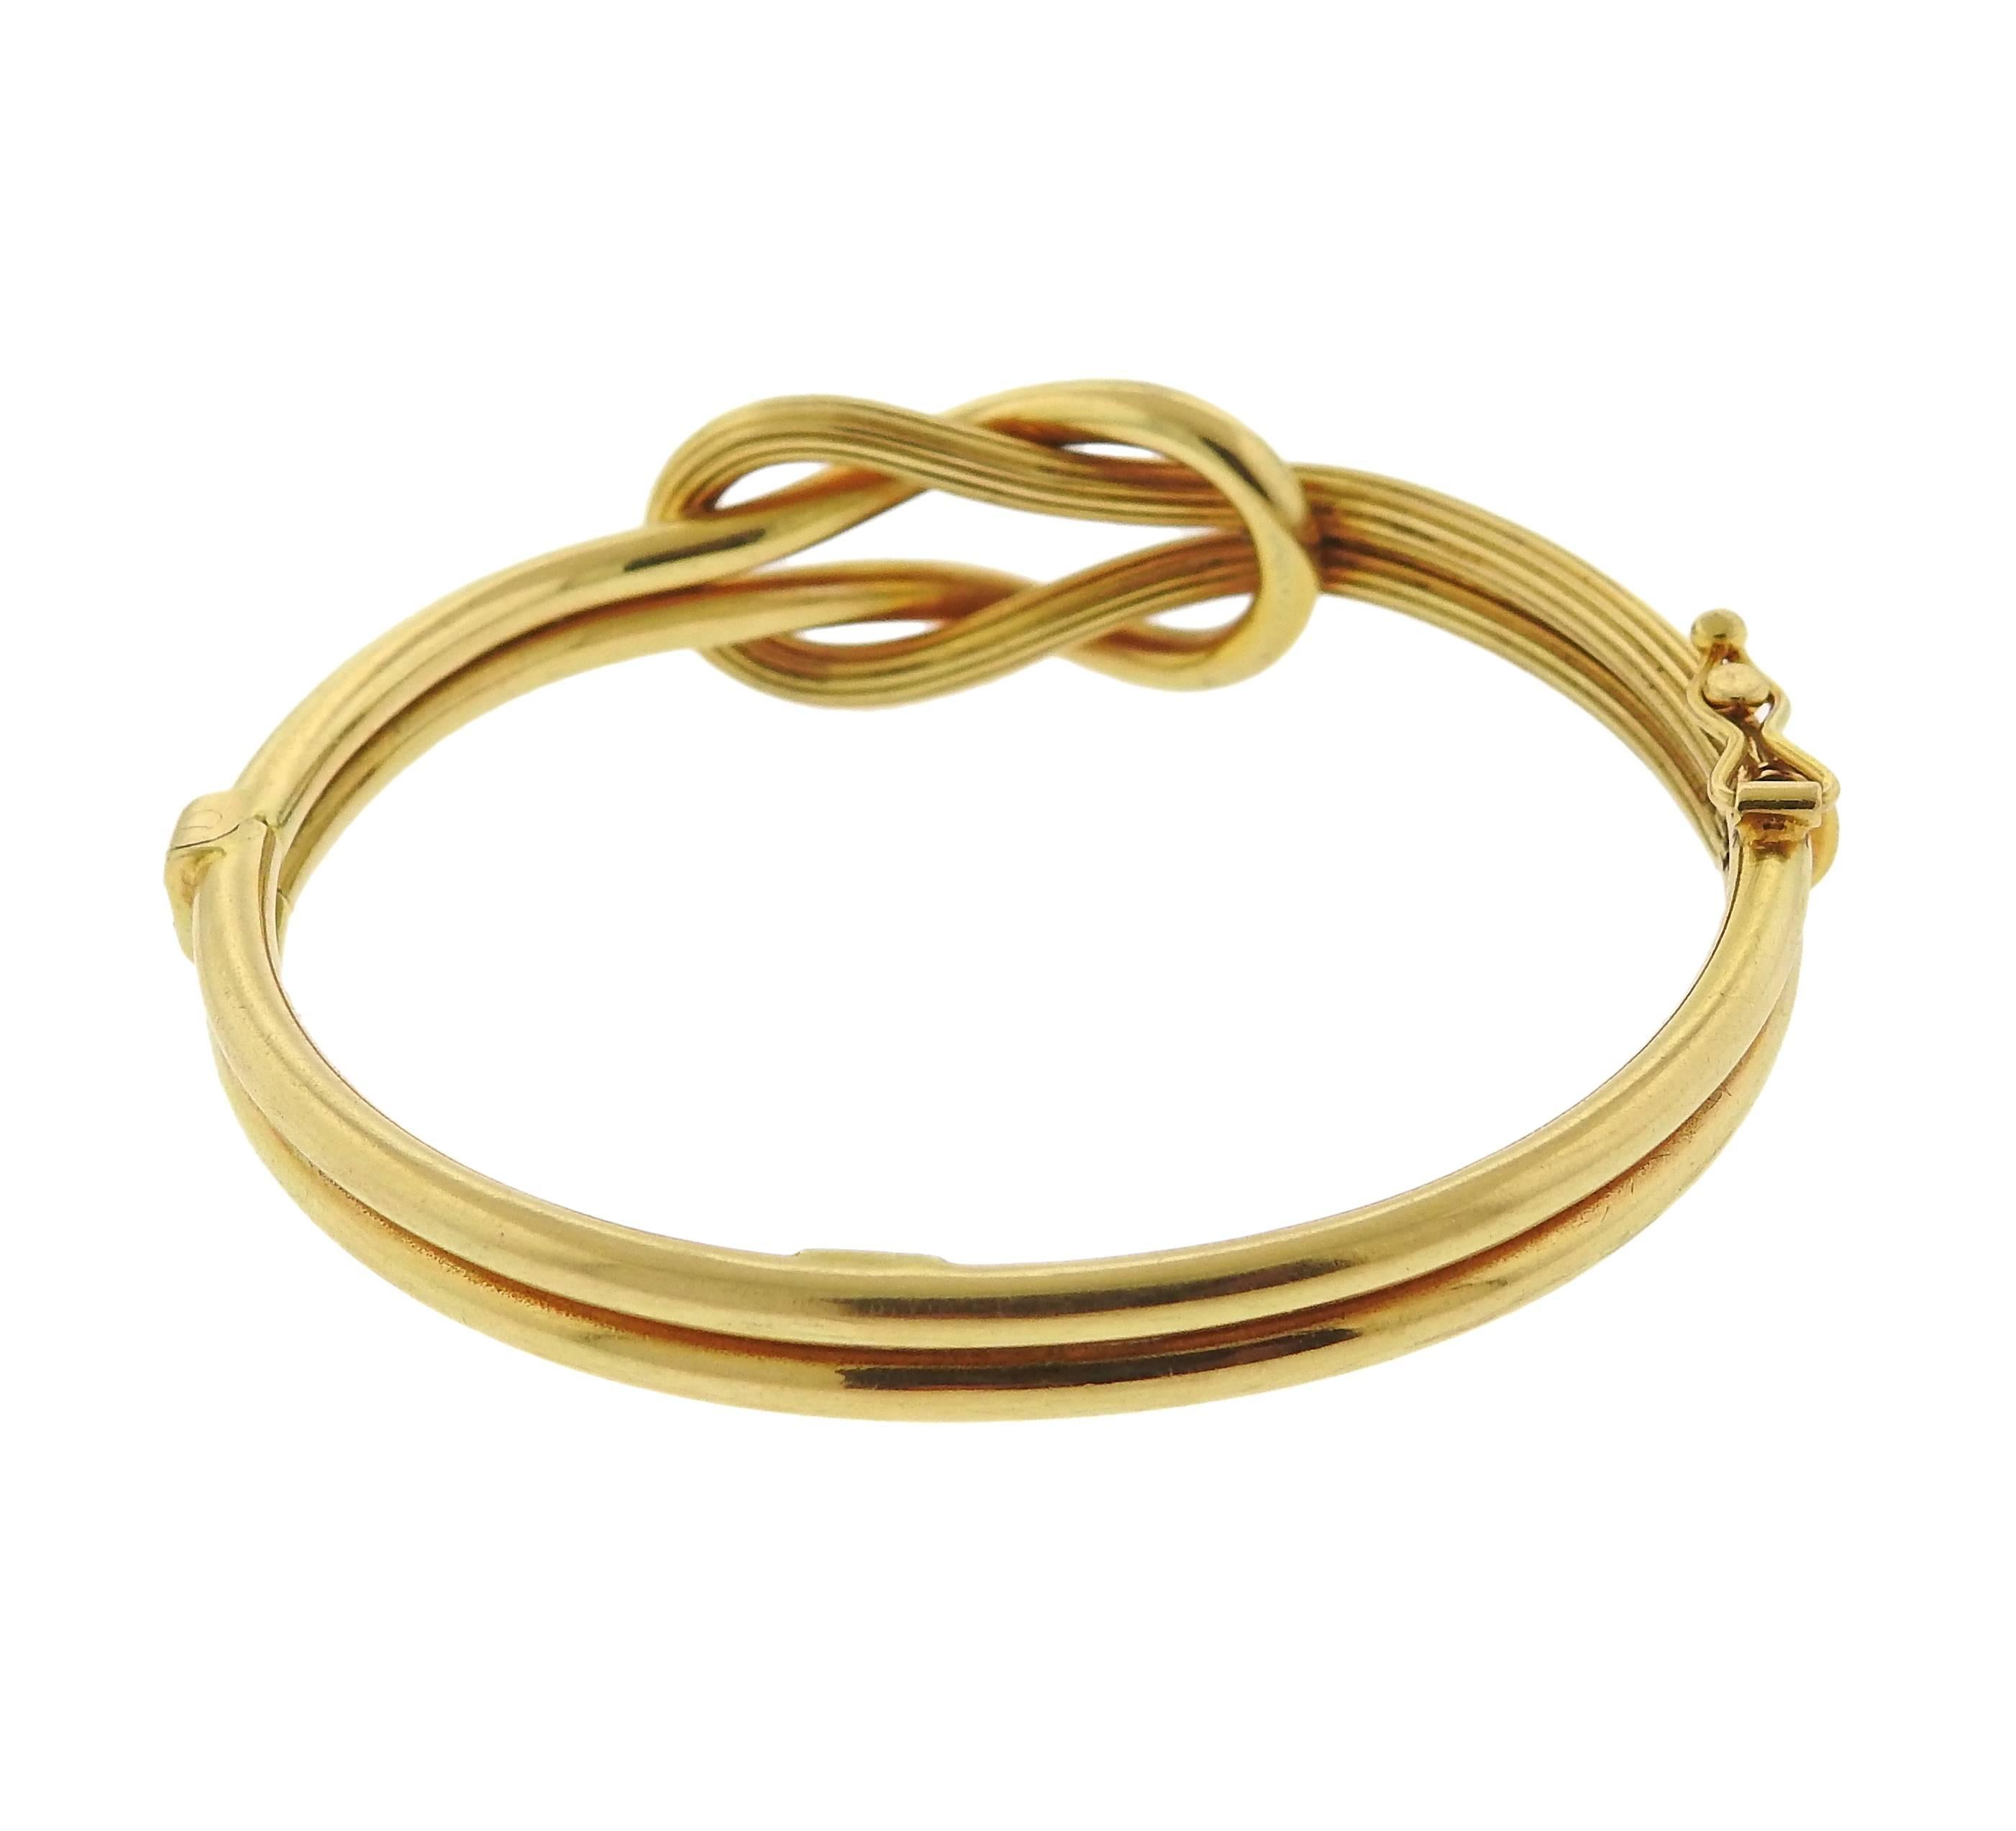 hercules knot bracelet